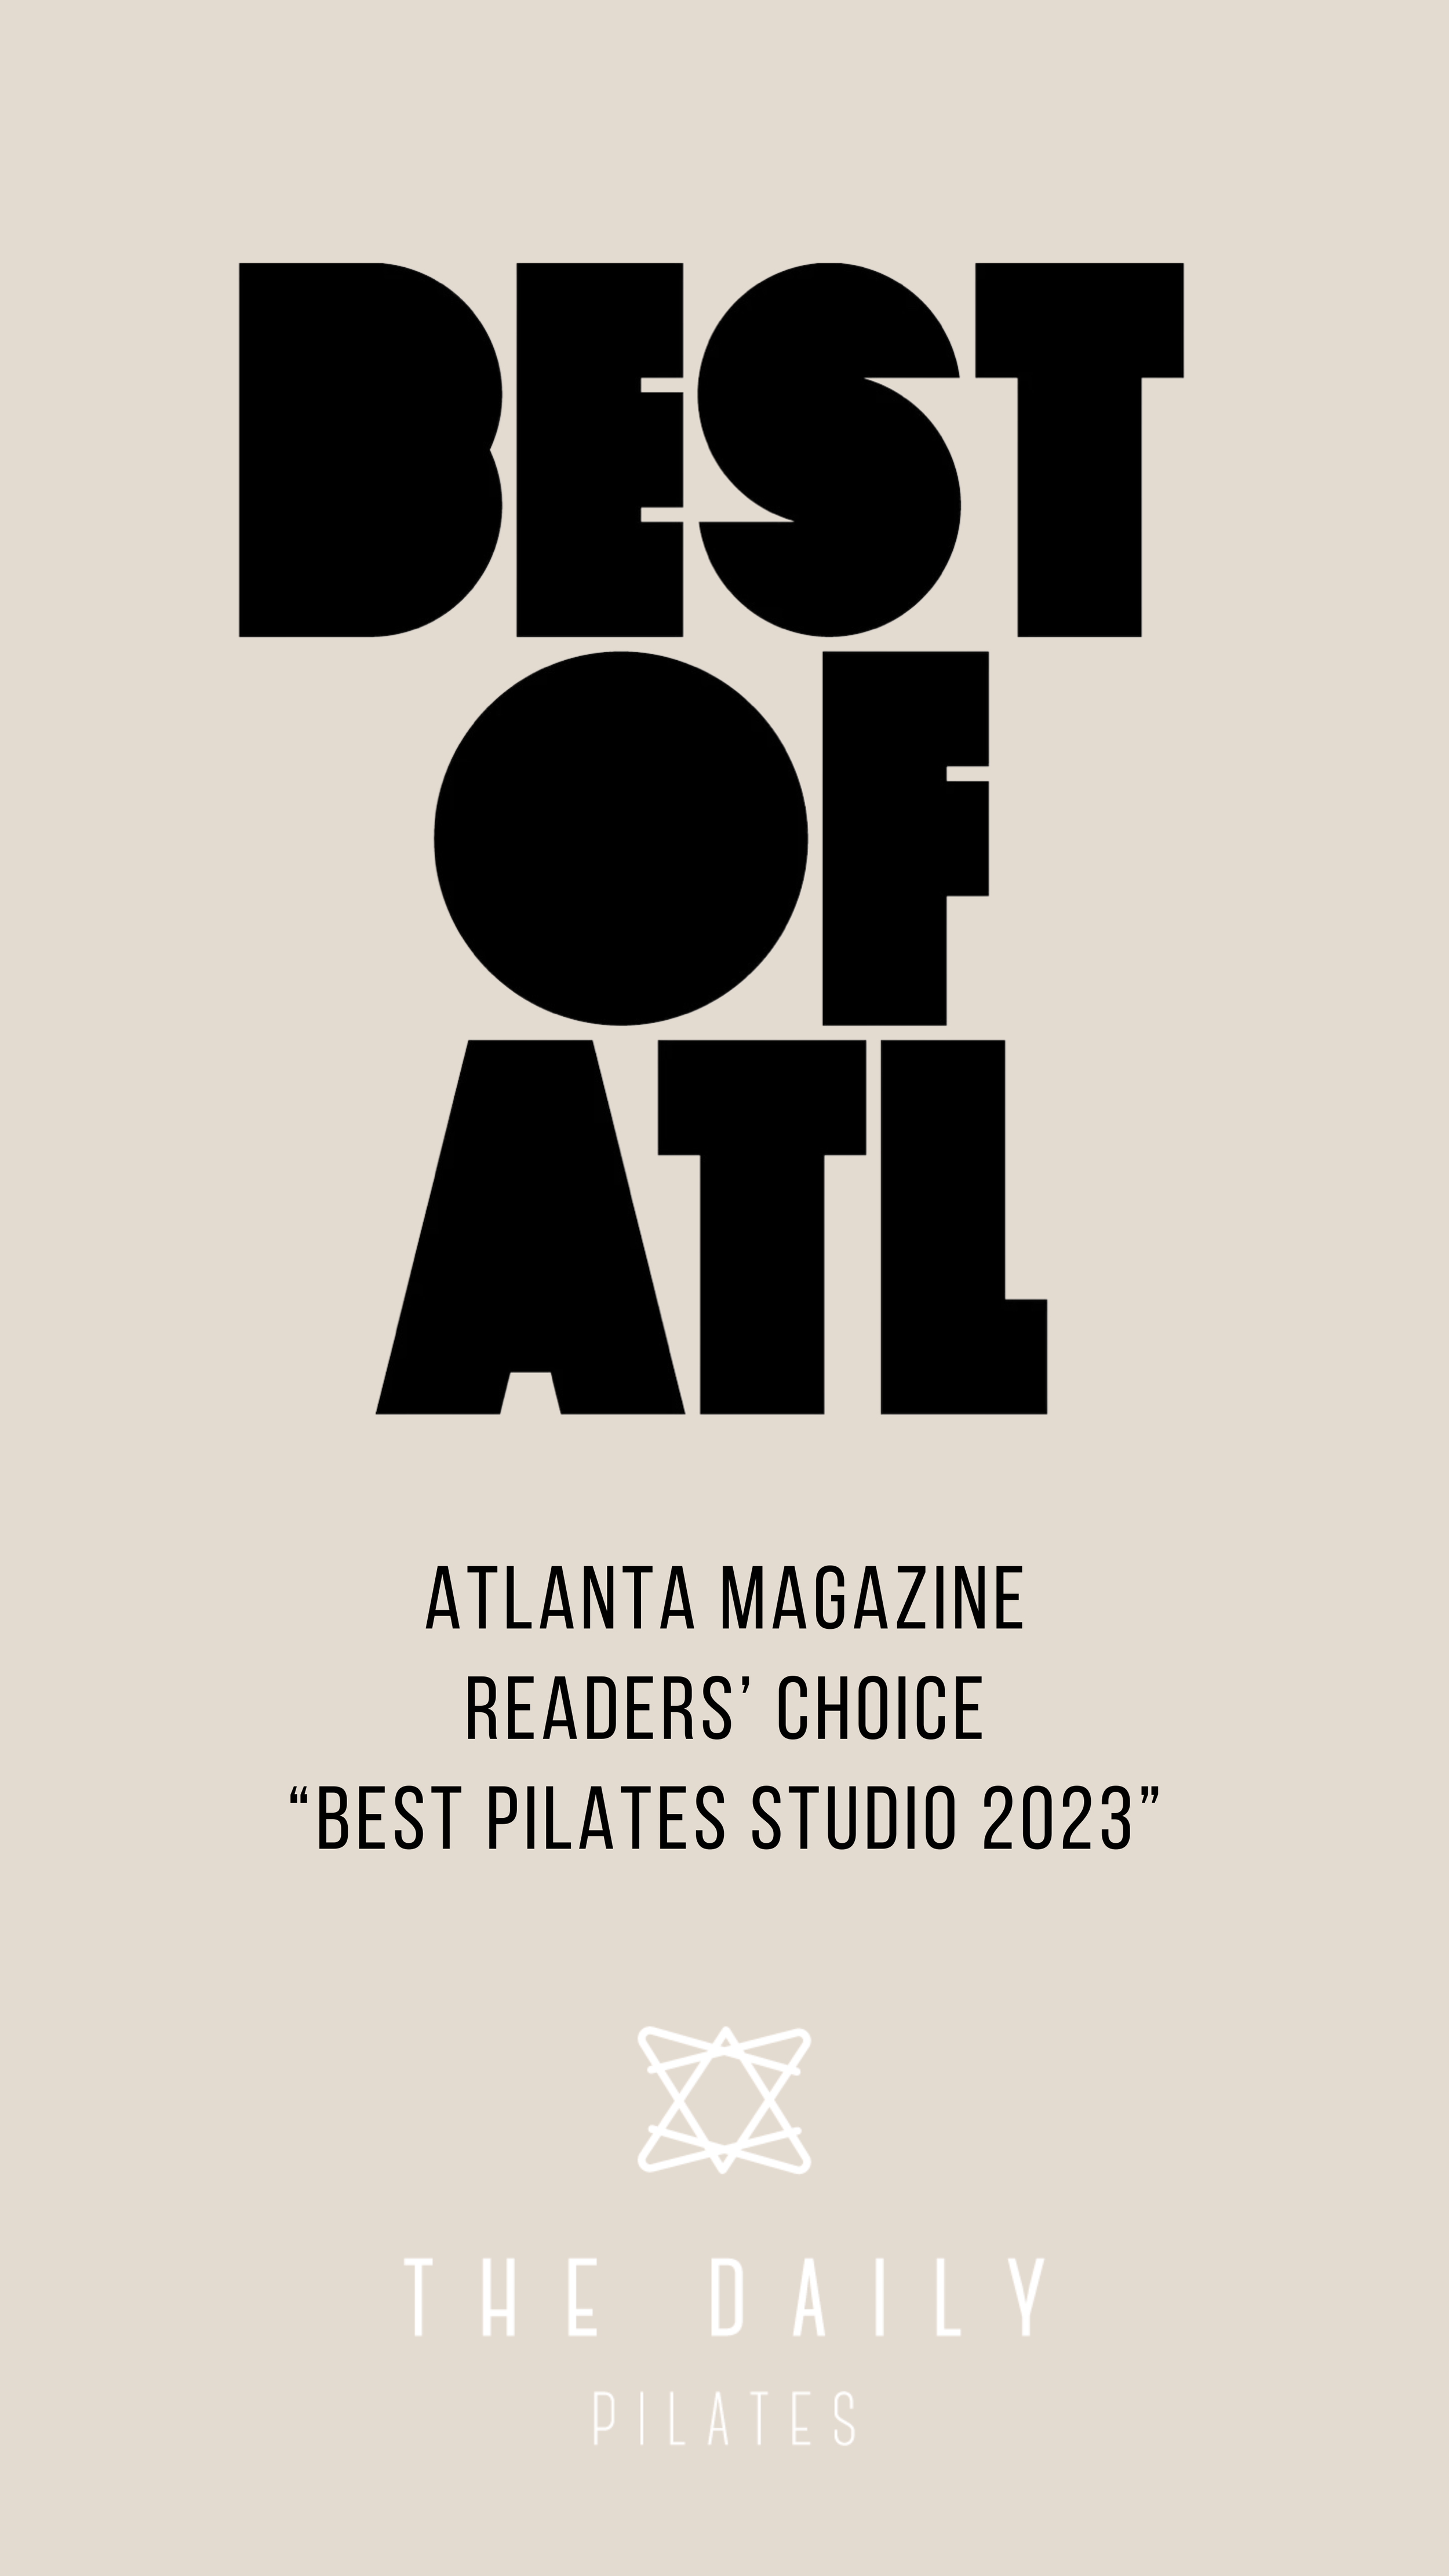 Best Pilates Studio — THE DAILY PILATES ®